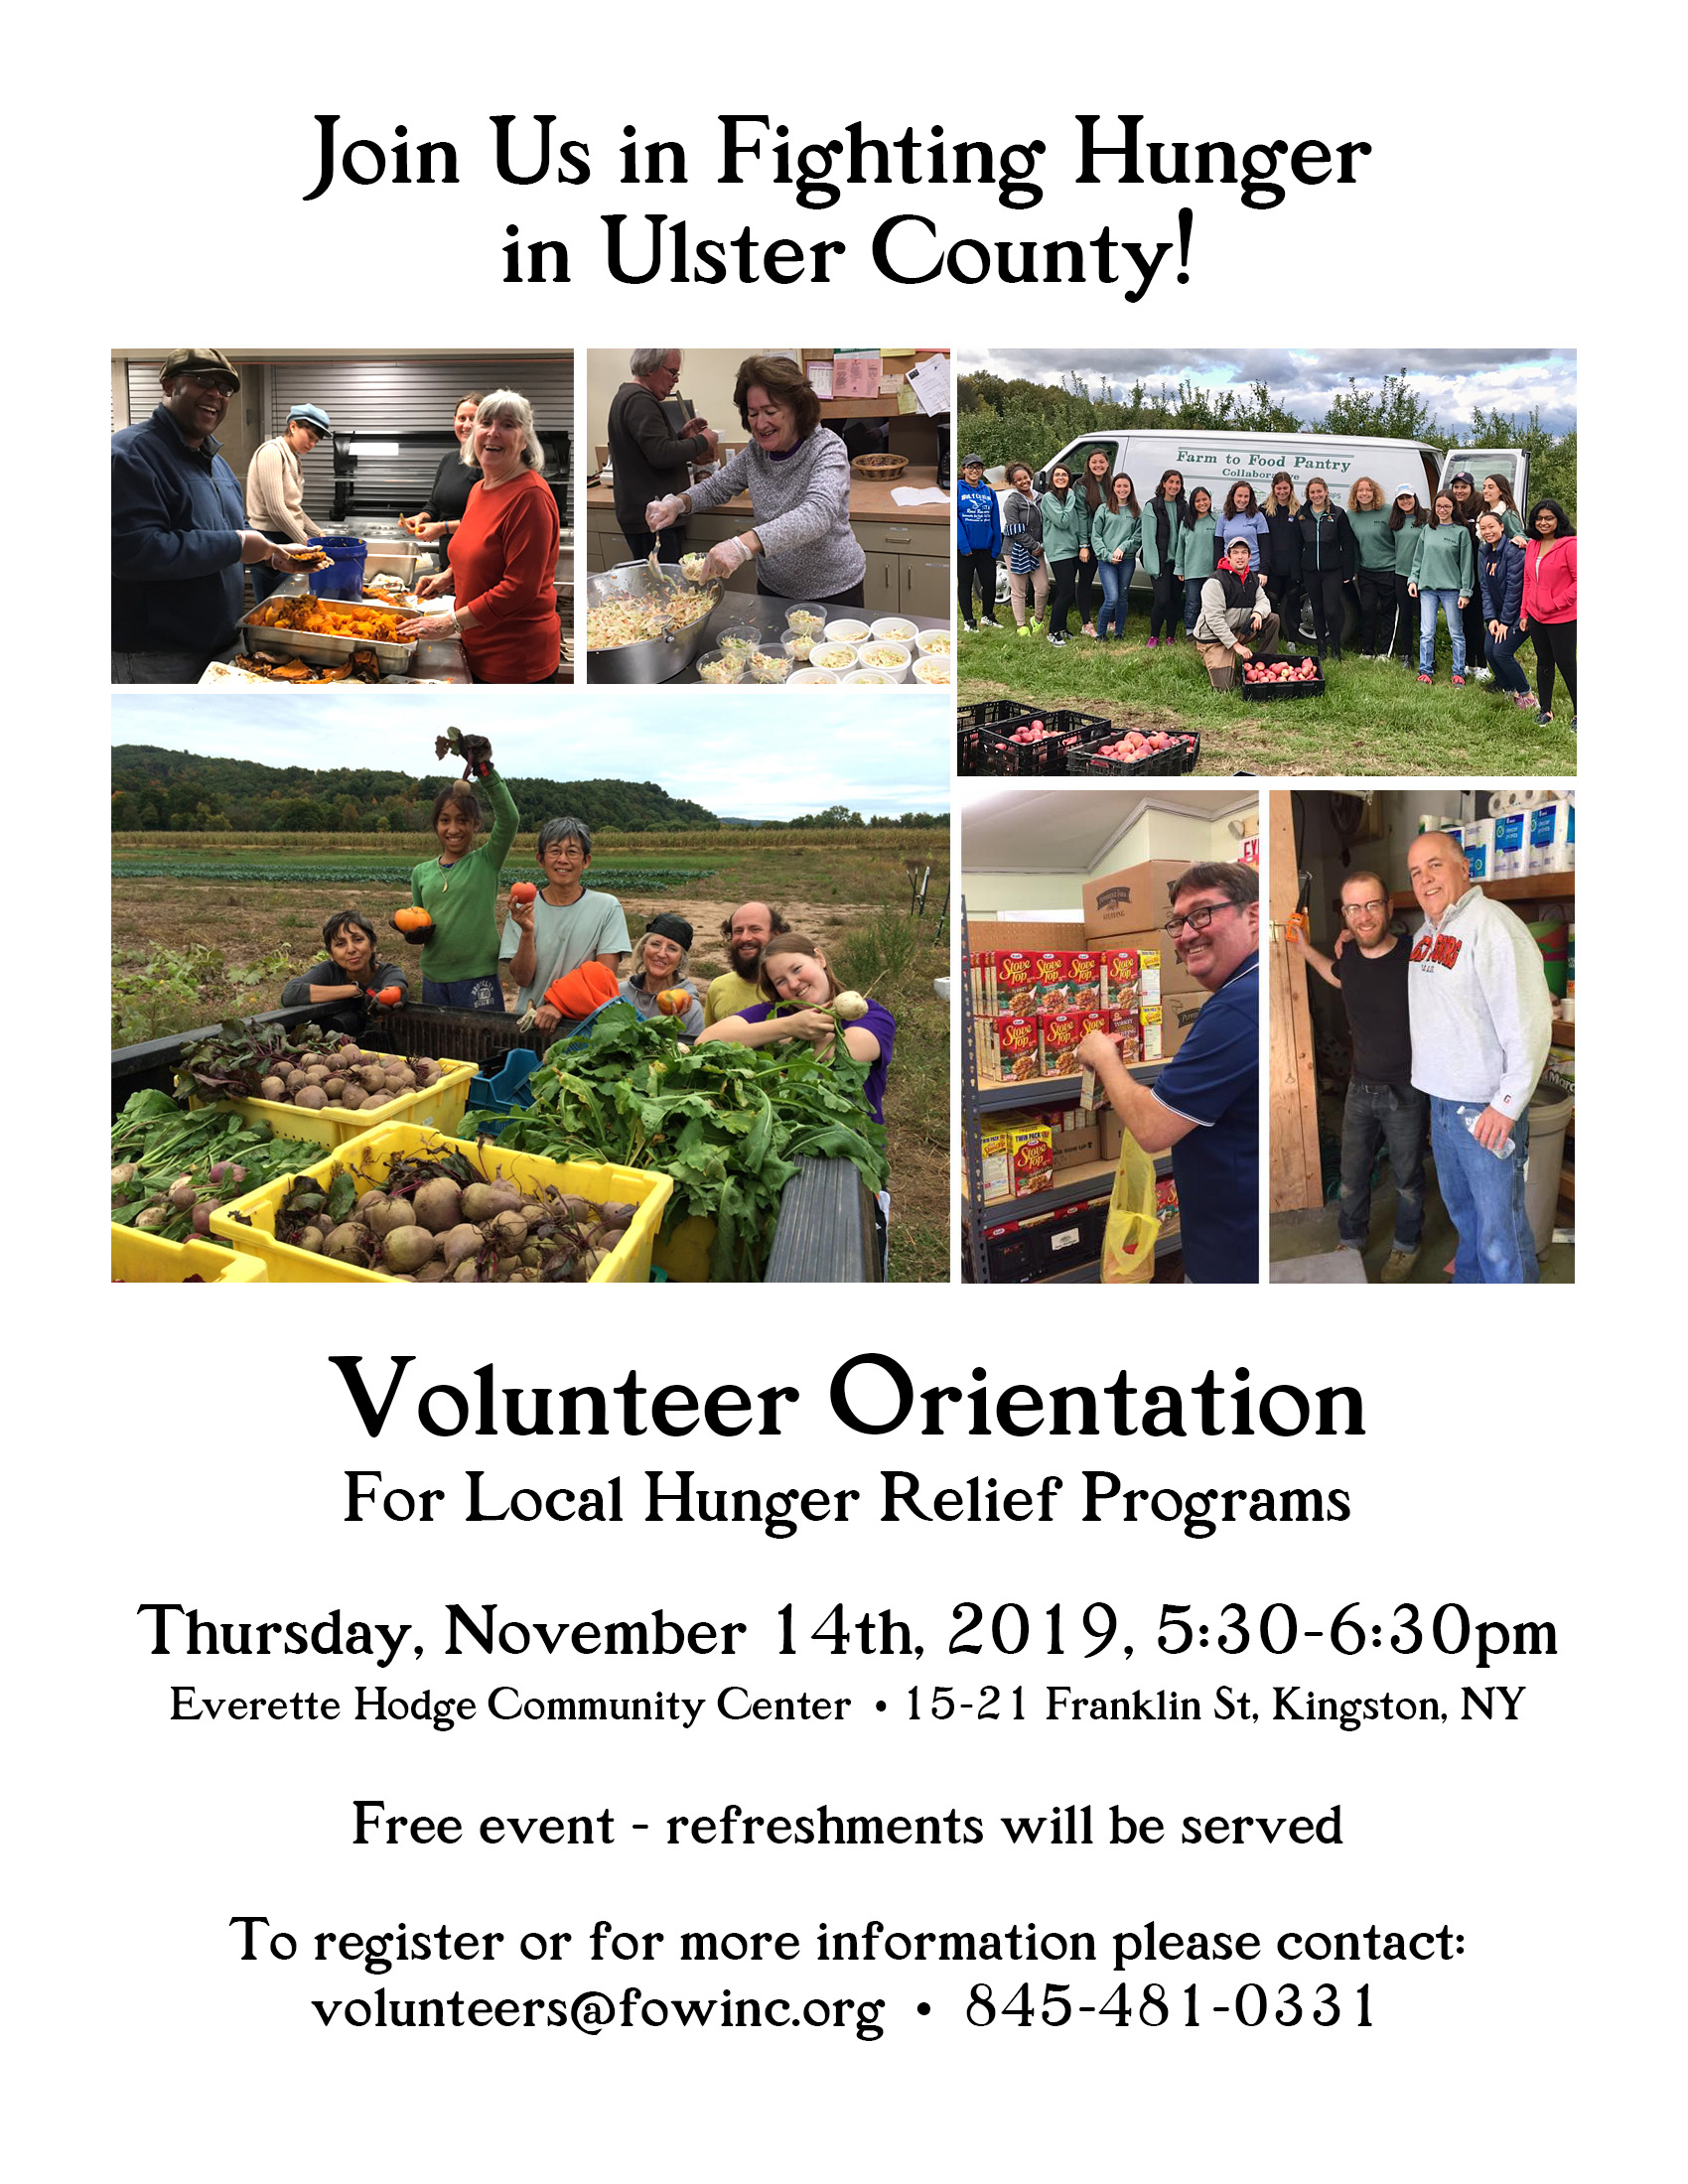 Volunteer Orientation for Local Hunger Relief Programs